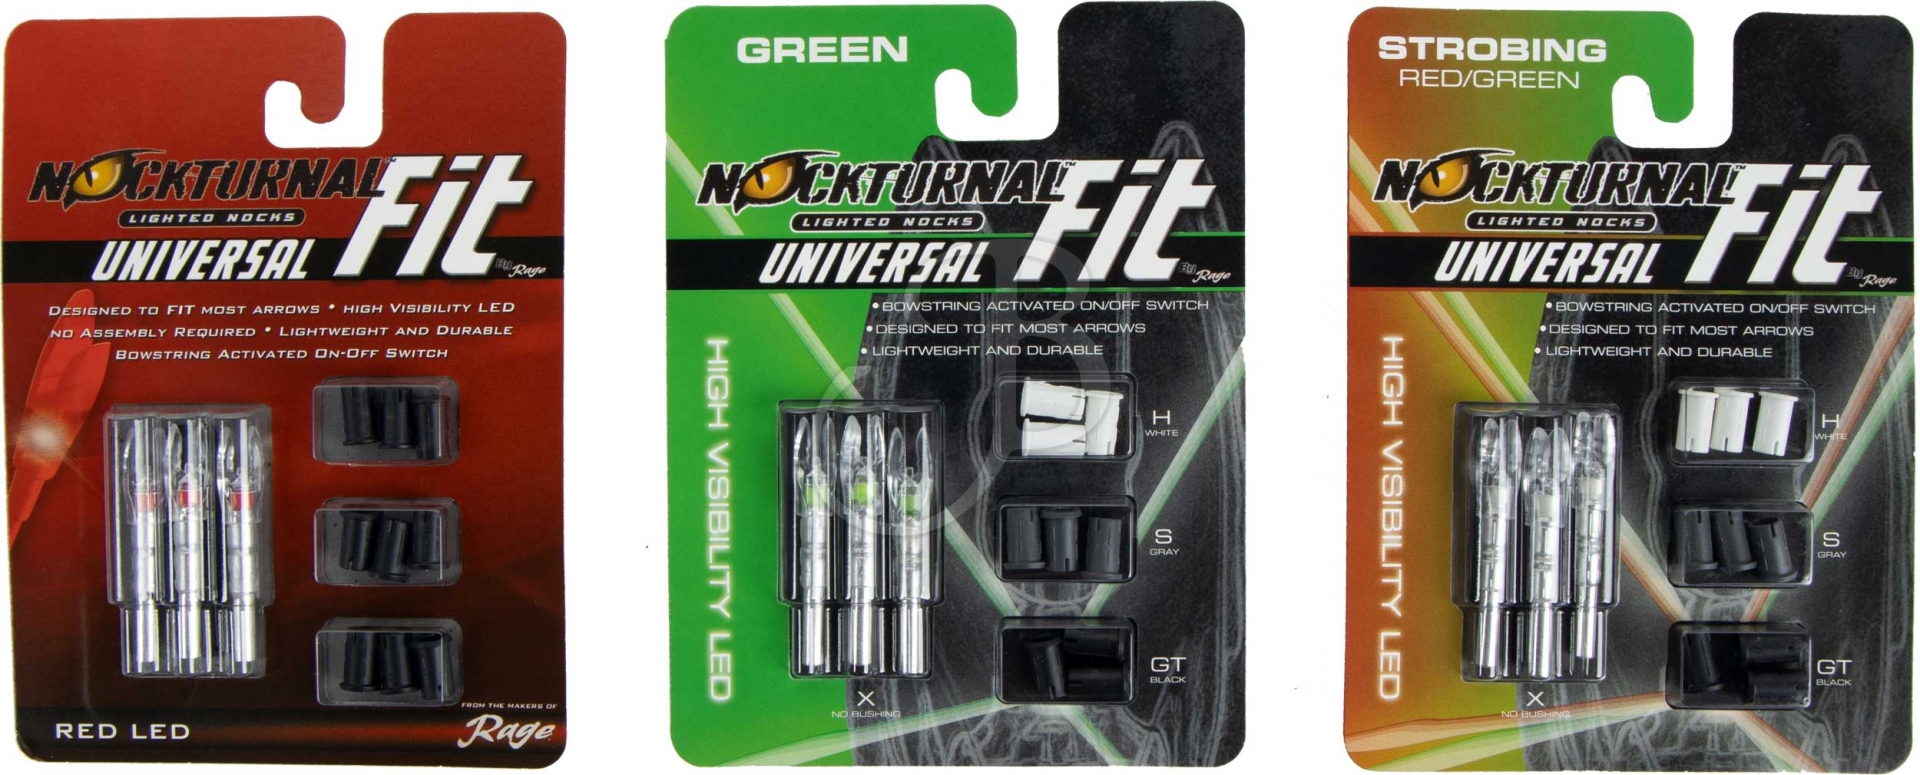 Nockturnal Universal-Nock strobing red/green 2x